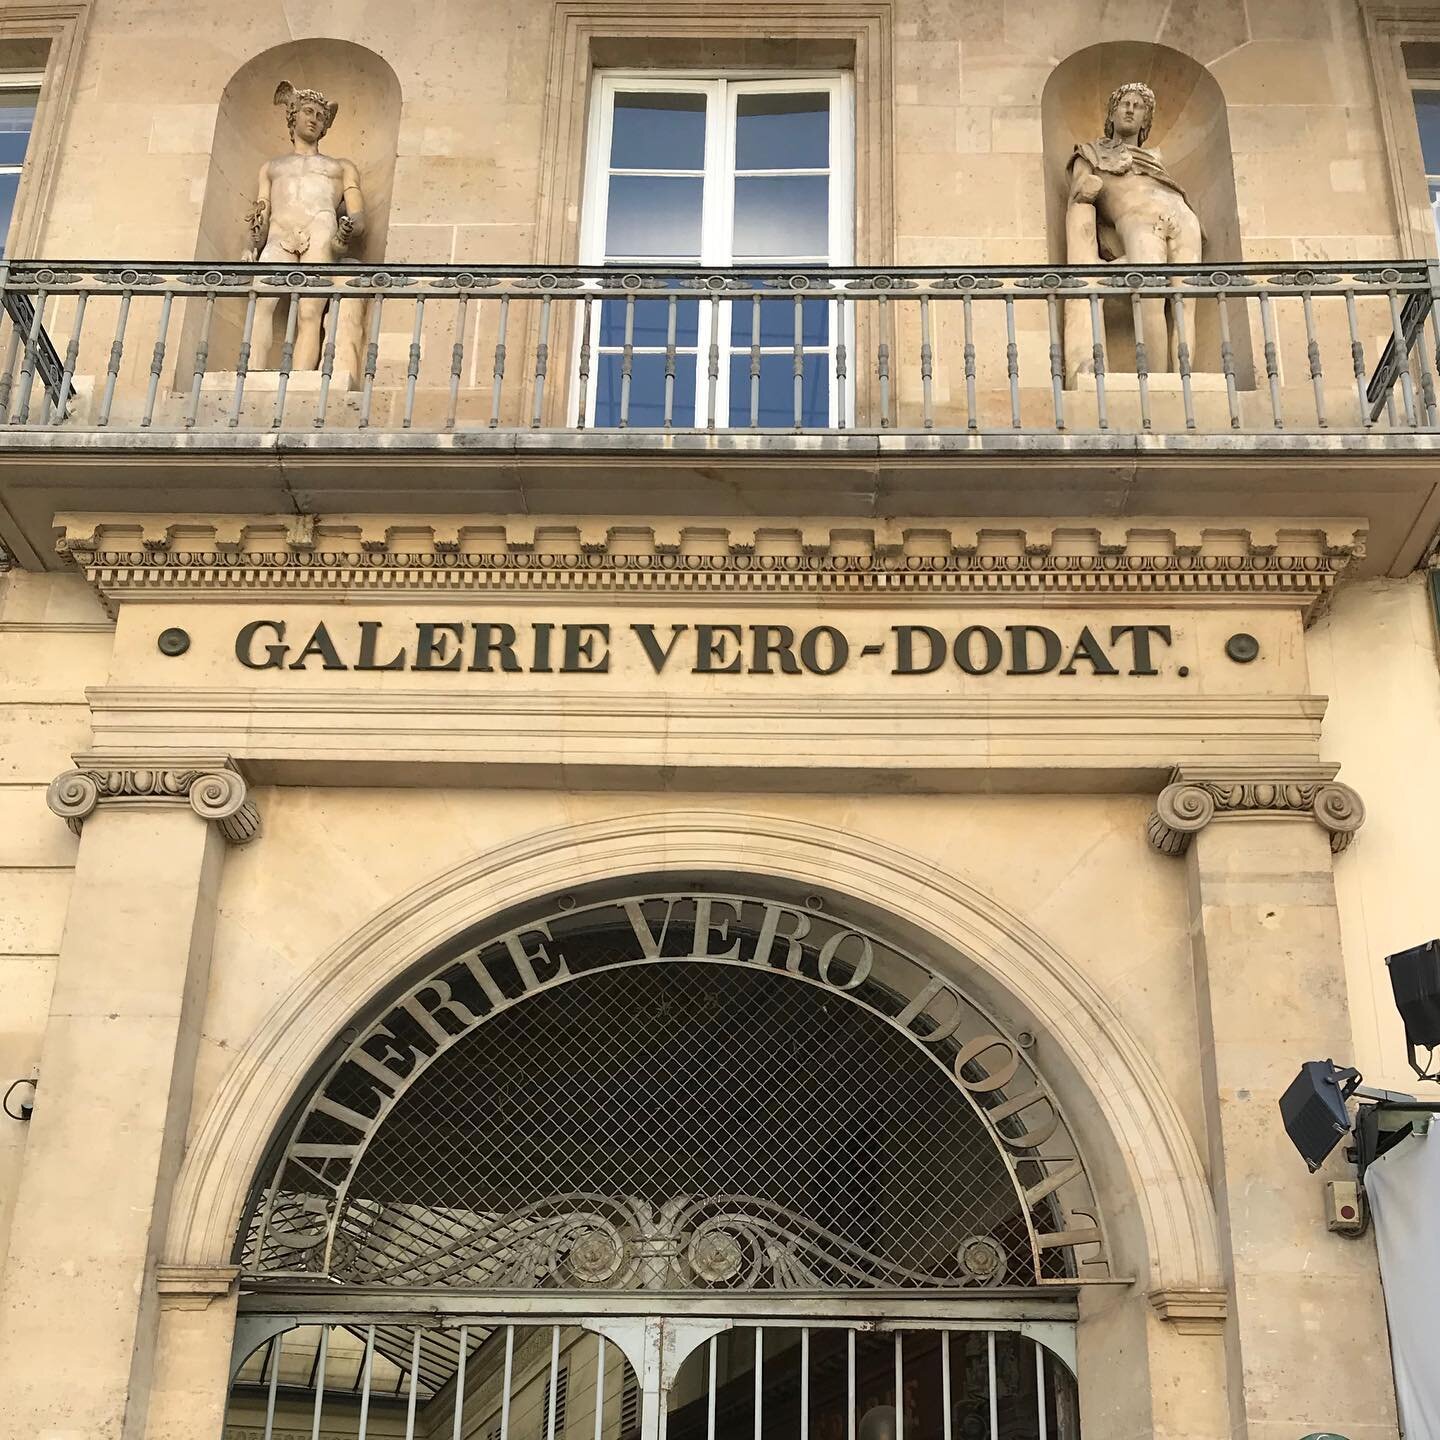 Galerie-Vero-Dodat-Parislogy.jpg.jpg